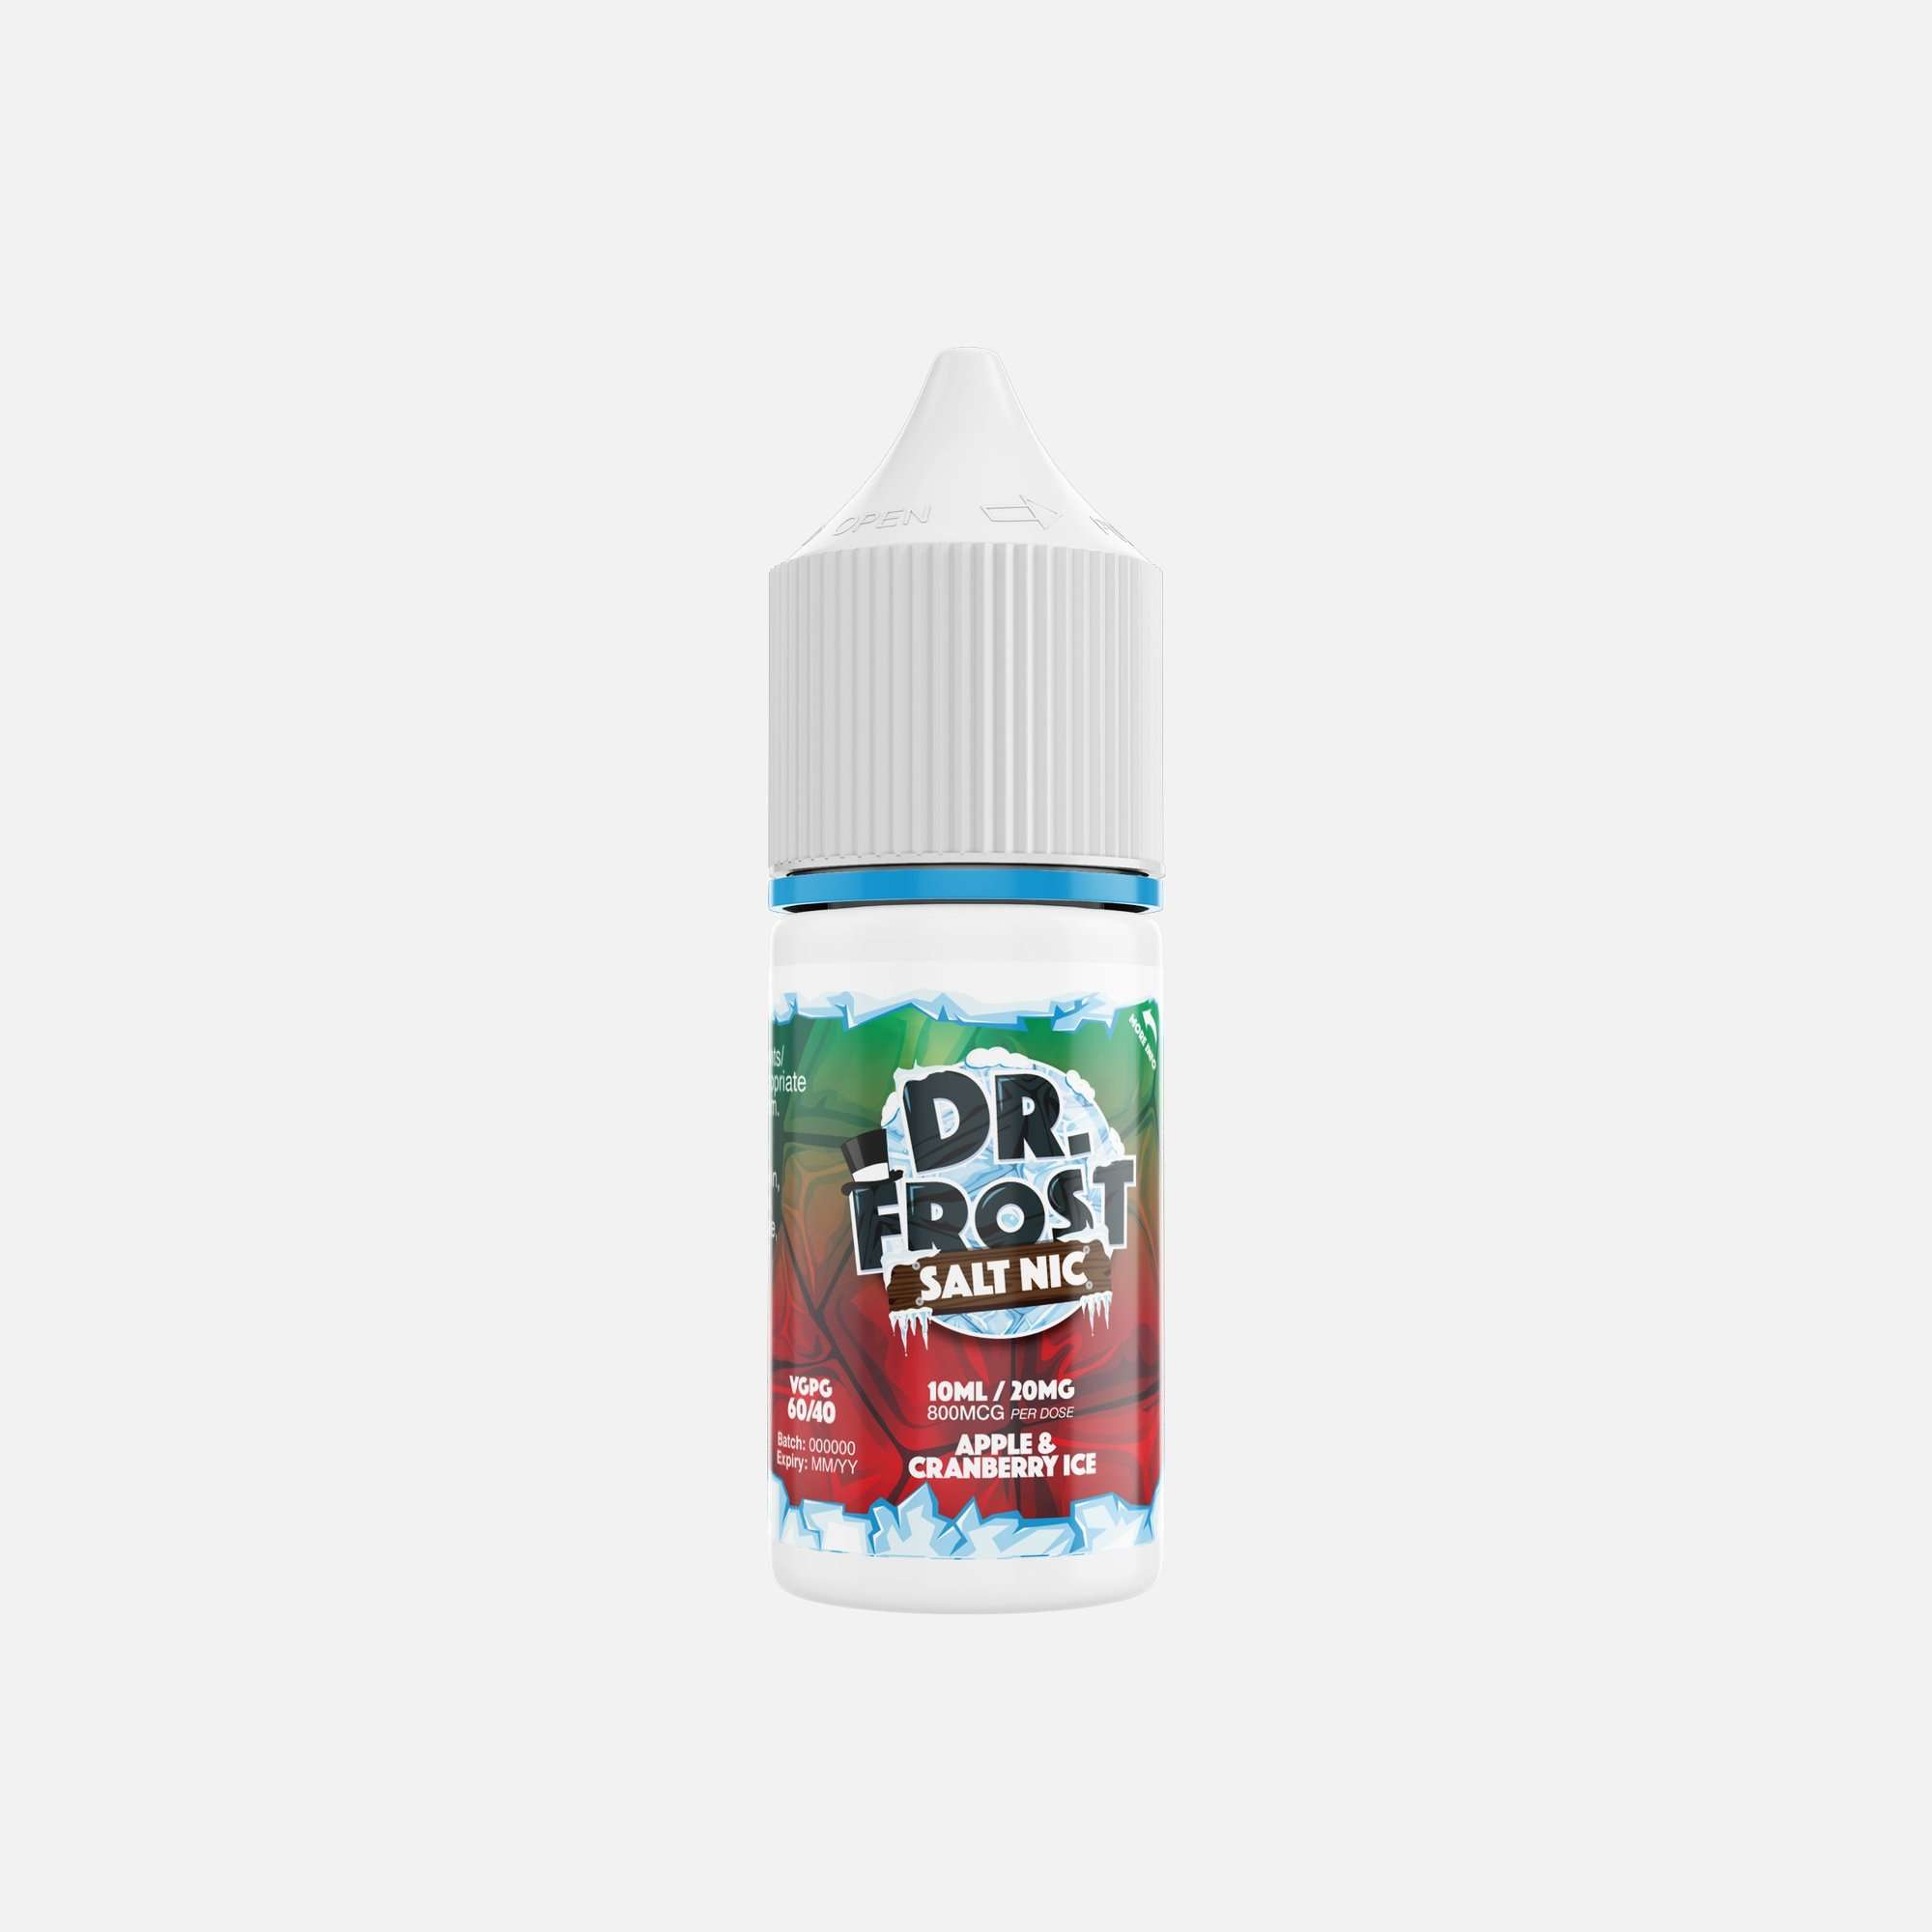  Apple & Cranberry Ice Nic Salt E-Liquid by Dr Frost 10ml 